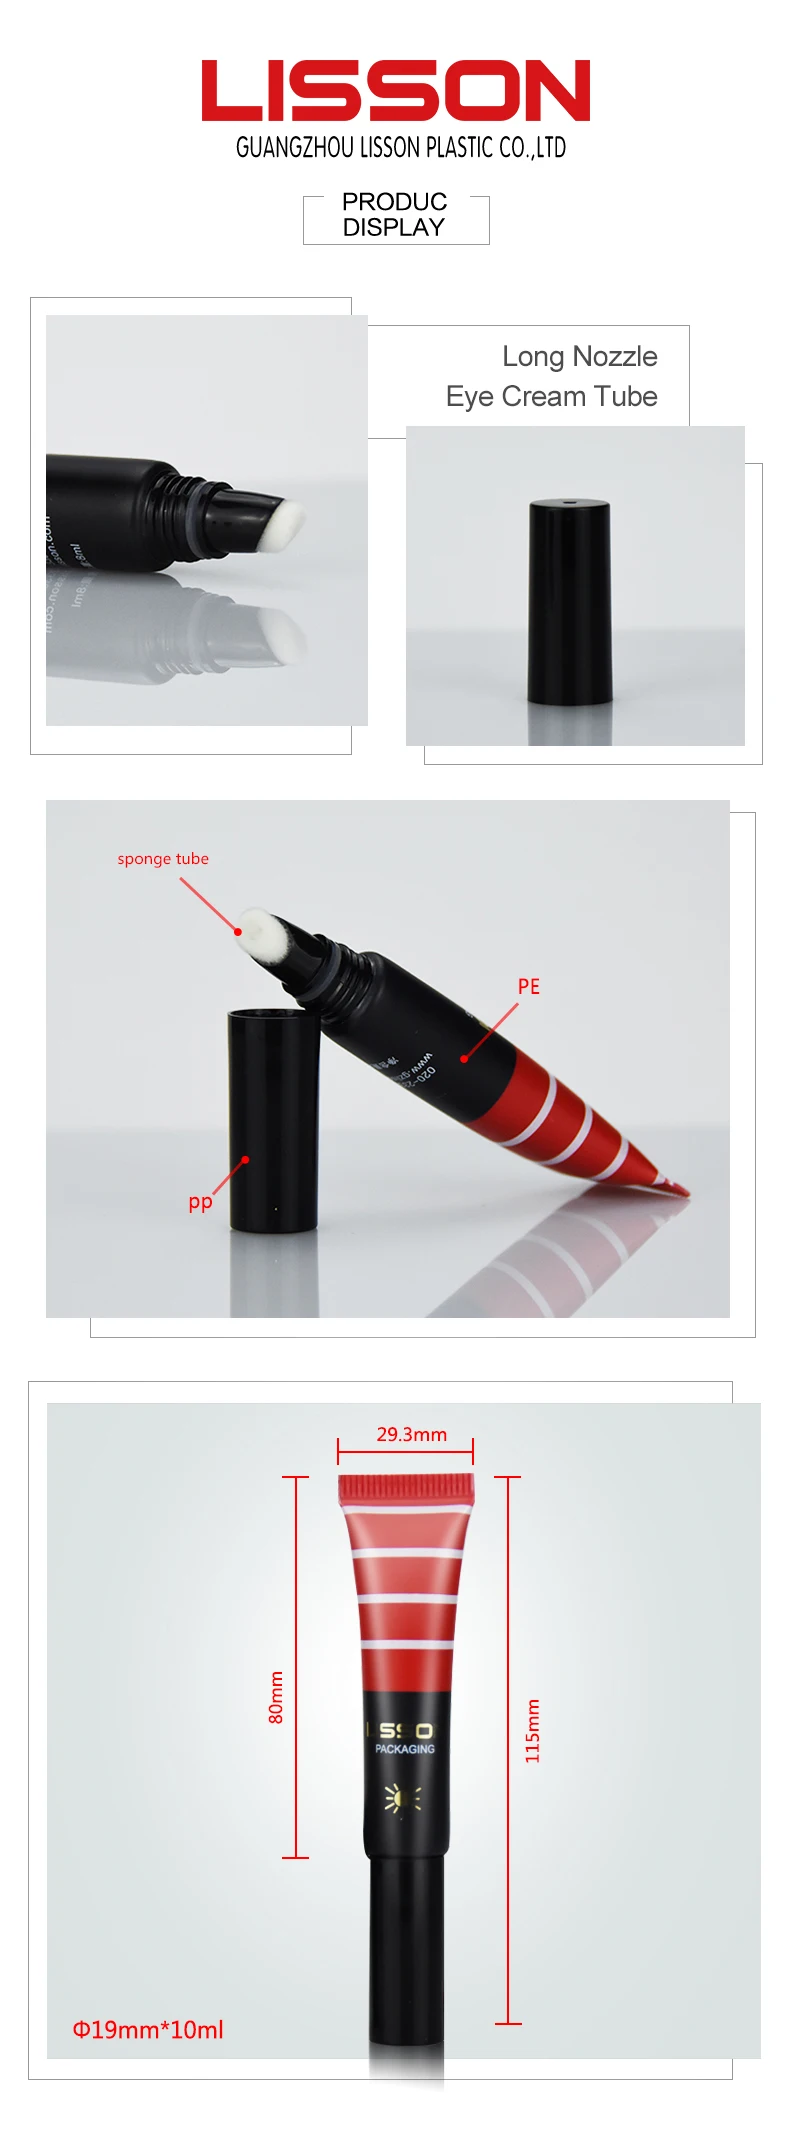 10ml empty custom lip balm lip gloss tube packaging with sponge applicator